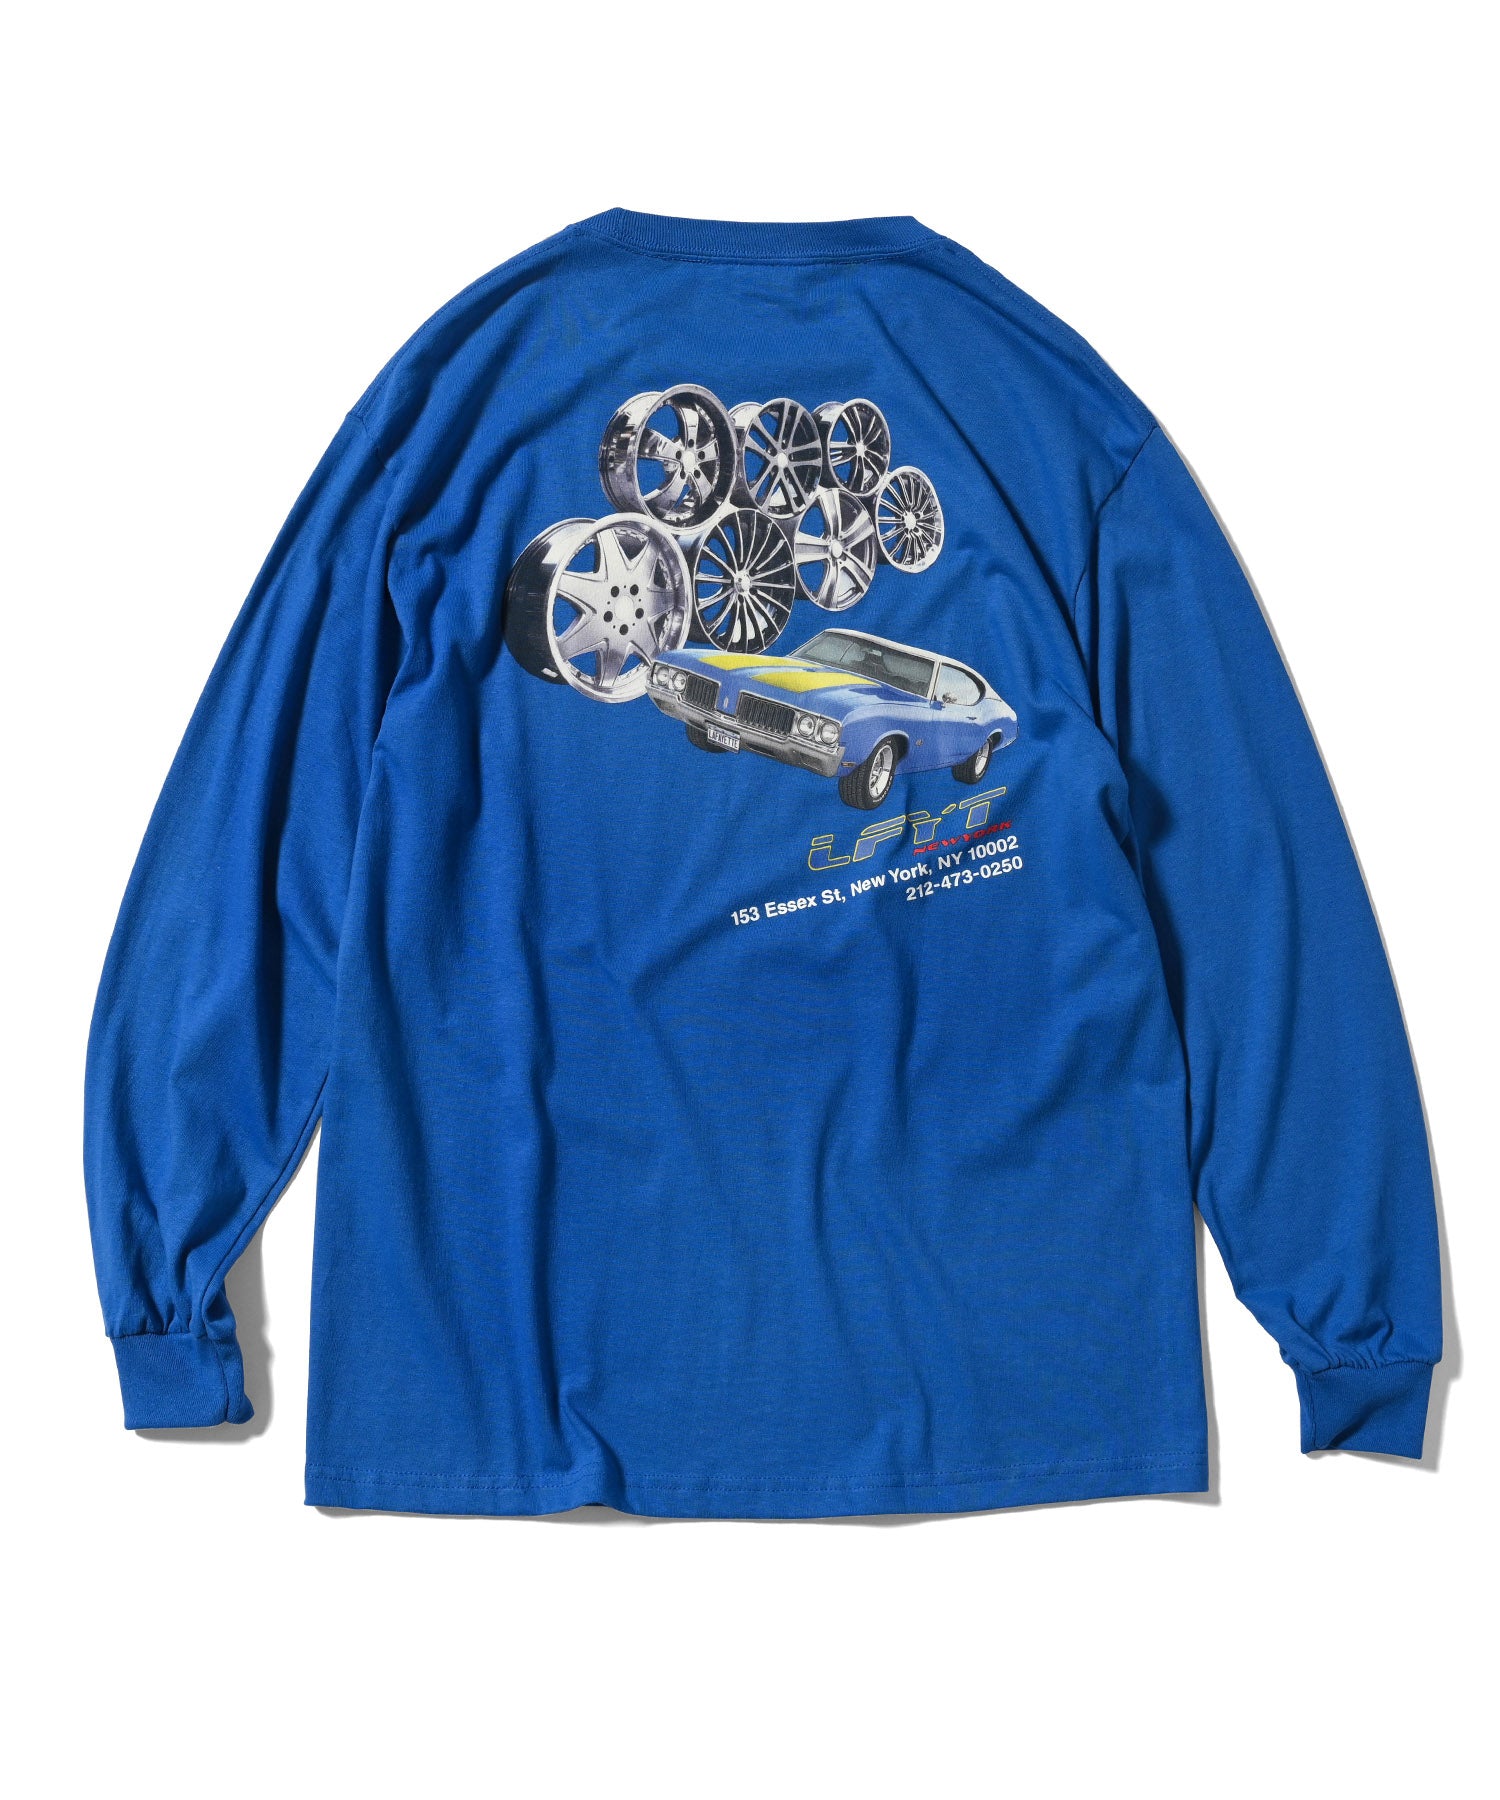 LFYT 鍍鉻輪 L/S T 卹 LA220101 藍色